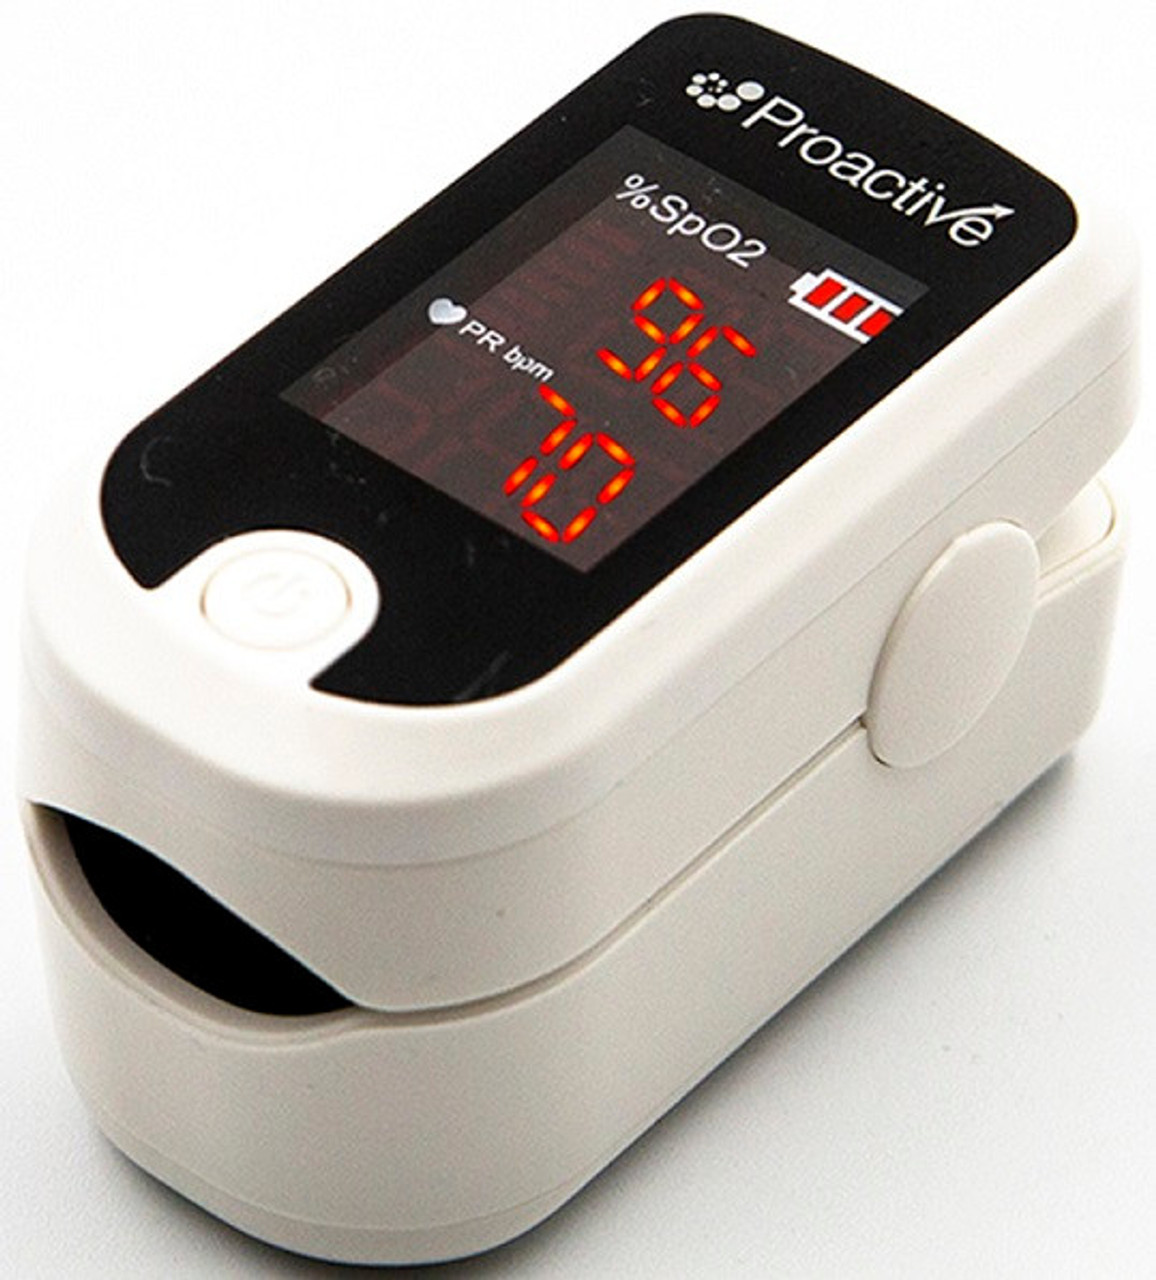 Proactive 20110 Finger Pulse Oximeter